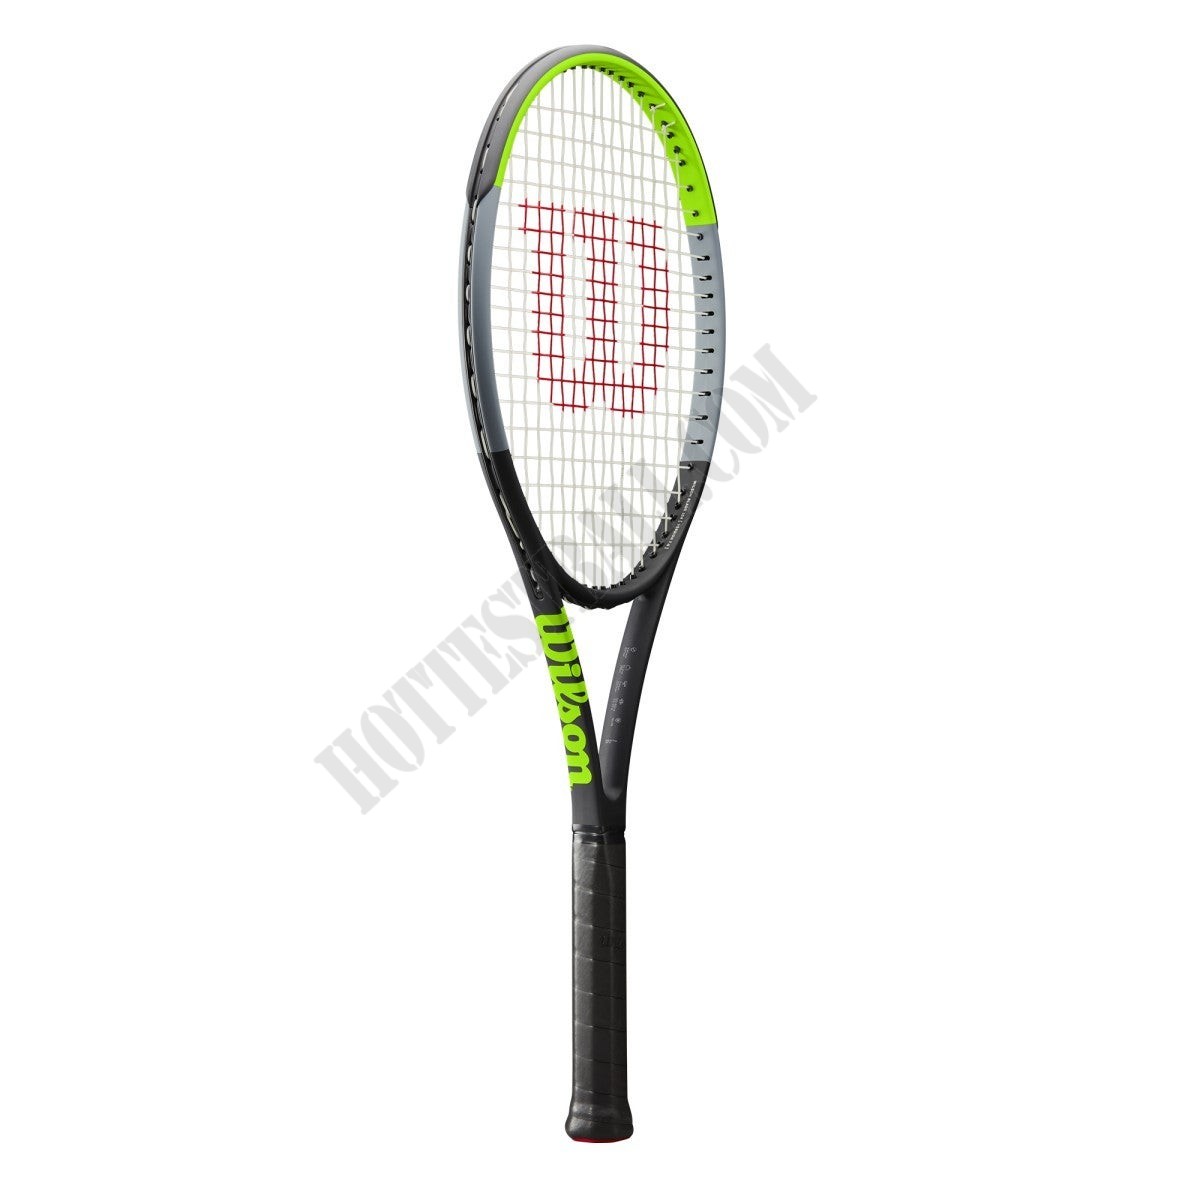 Blade 104 V7 Tennis Racket - Wilson Discount Store - Blade 104 V7 Tennis Racket - Wilson Discount Store